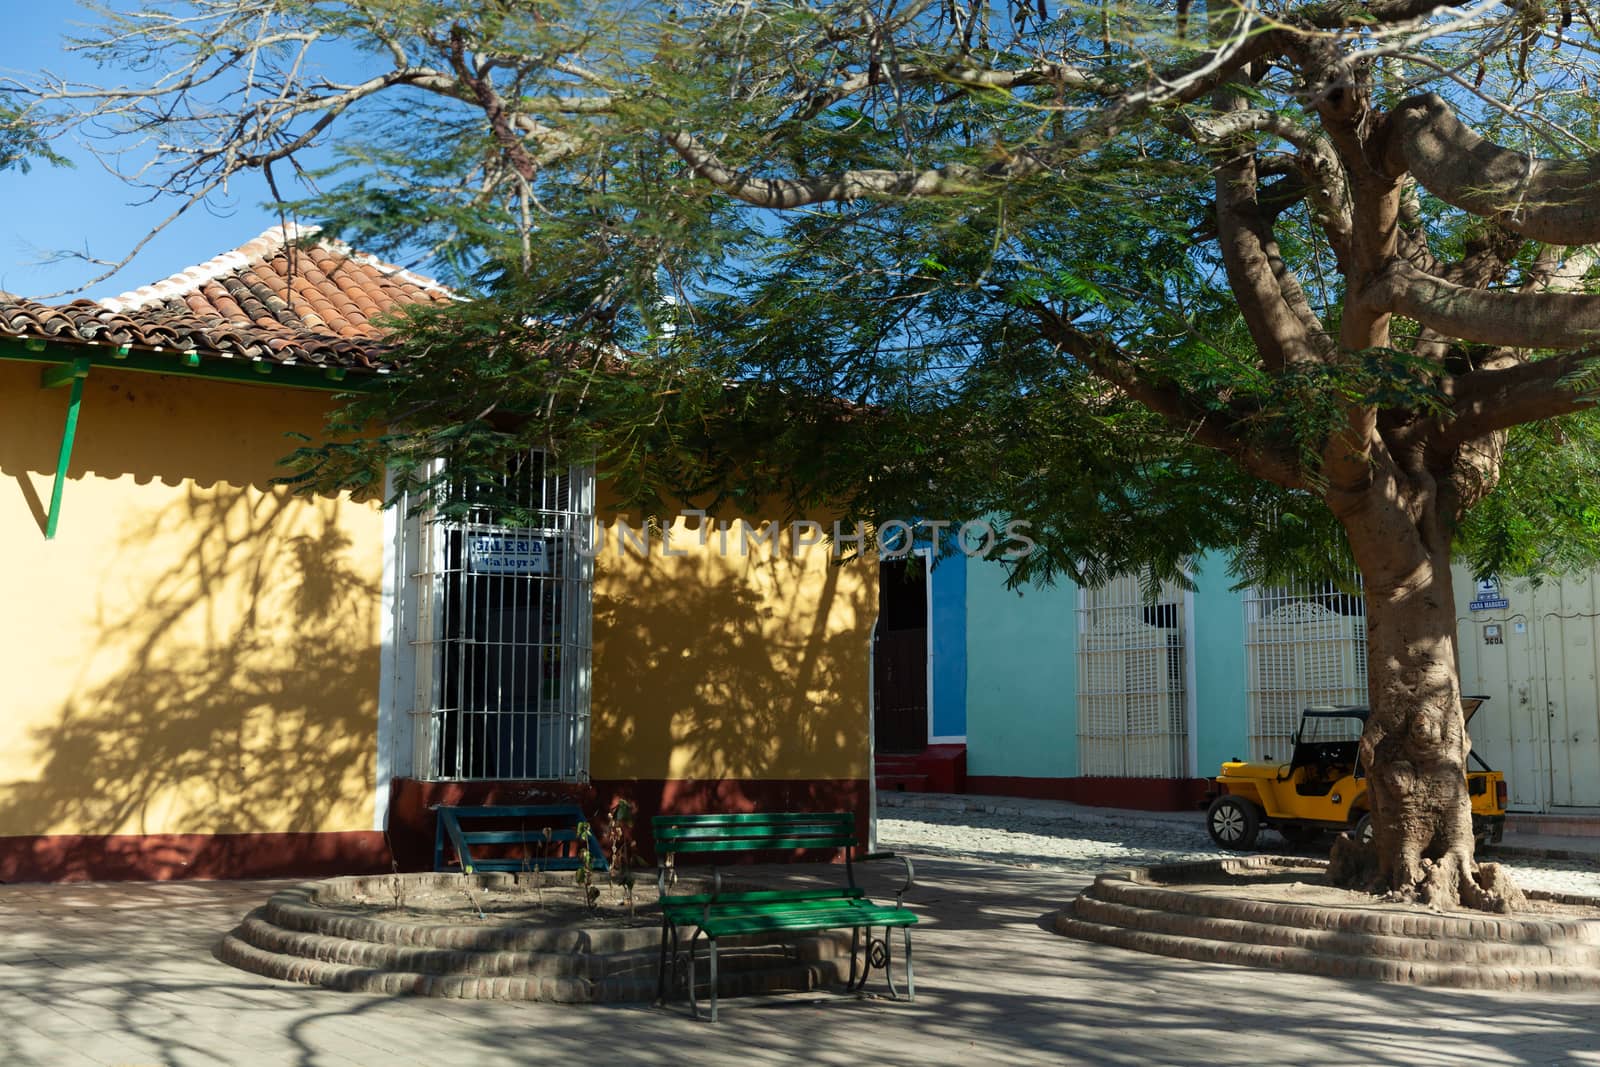 Trinidad, Cuba - 2 February 2015: Plazuela del Cristo